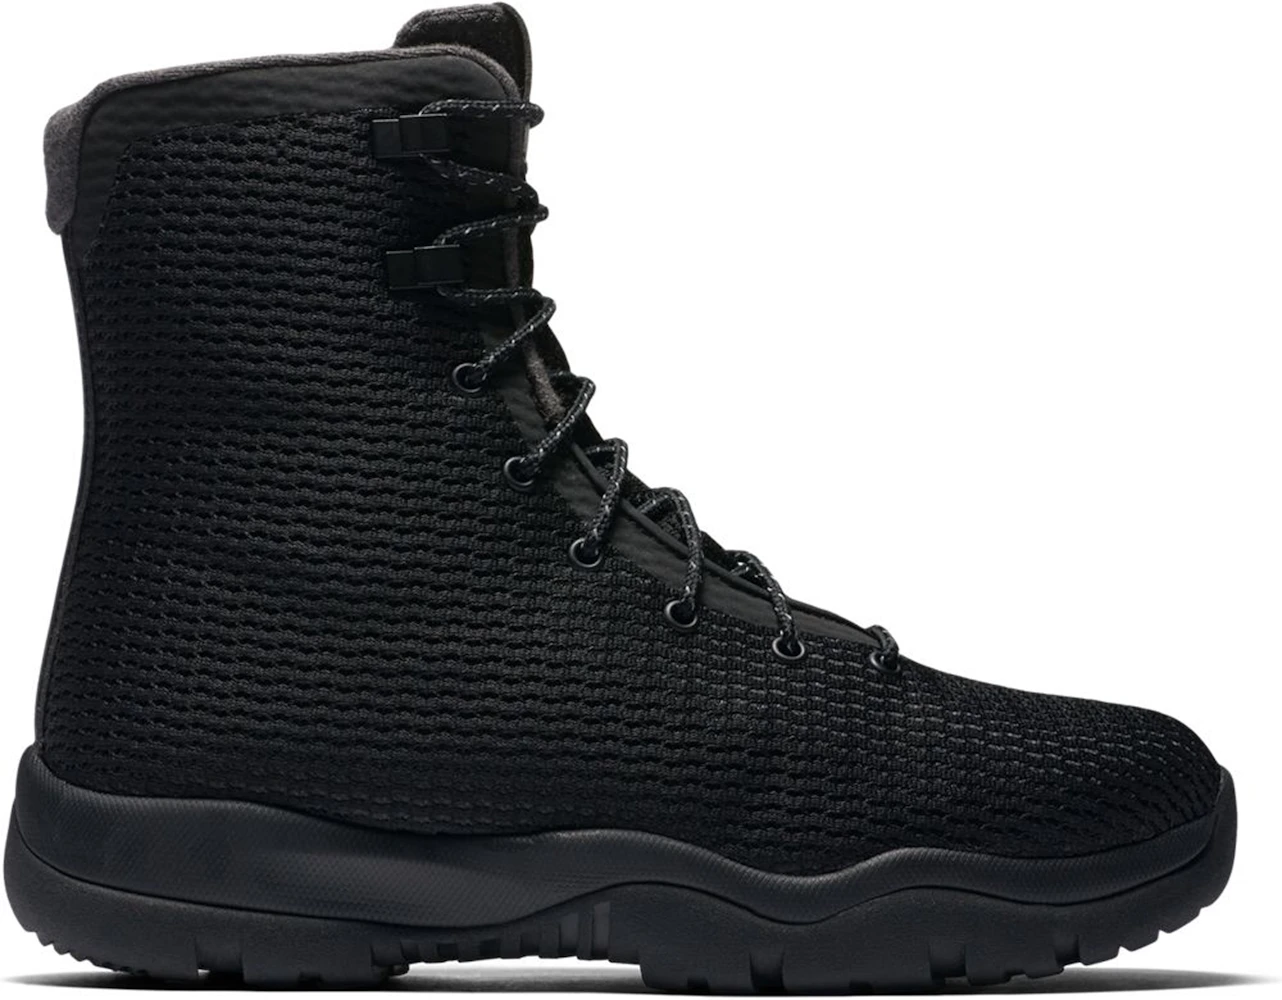 Boot Black Men's - 854554-002 - US